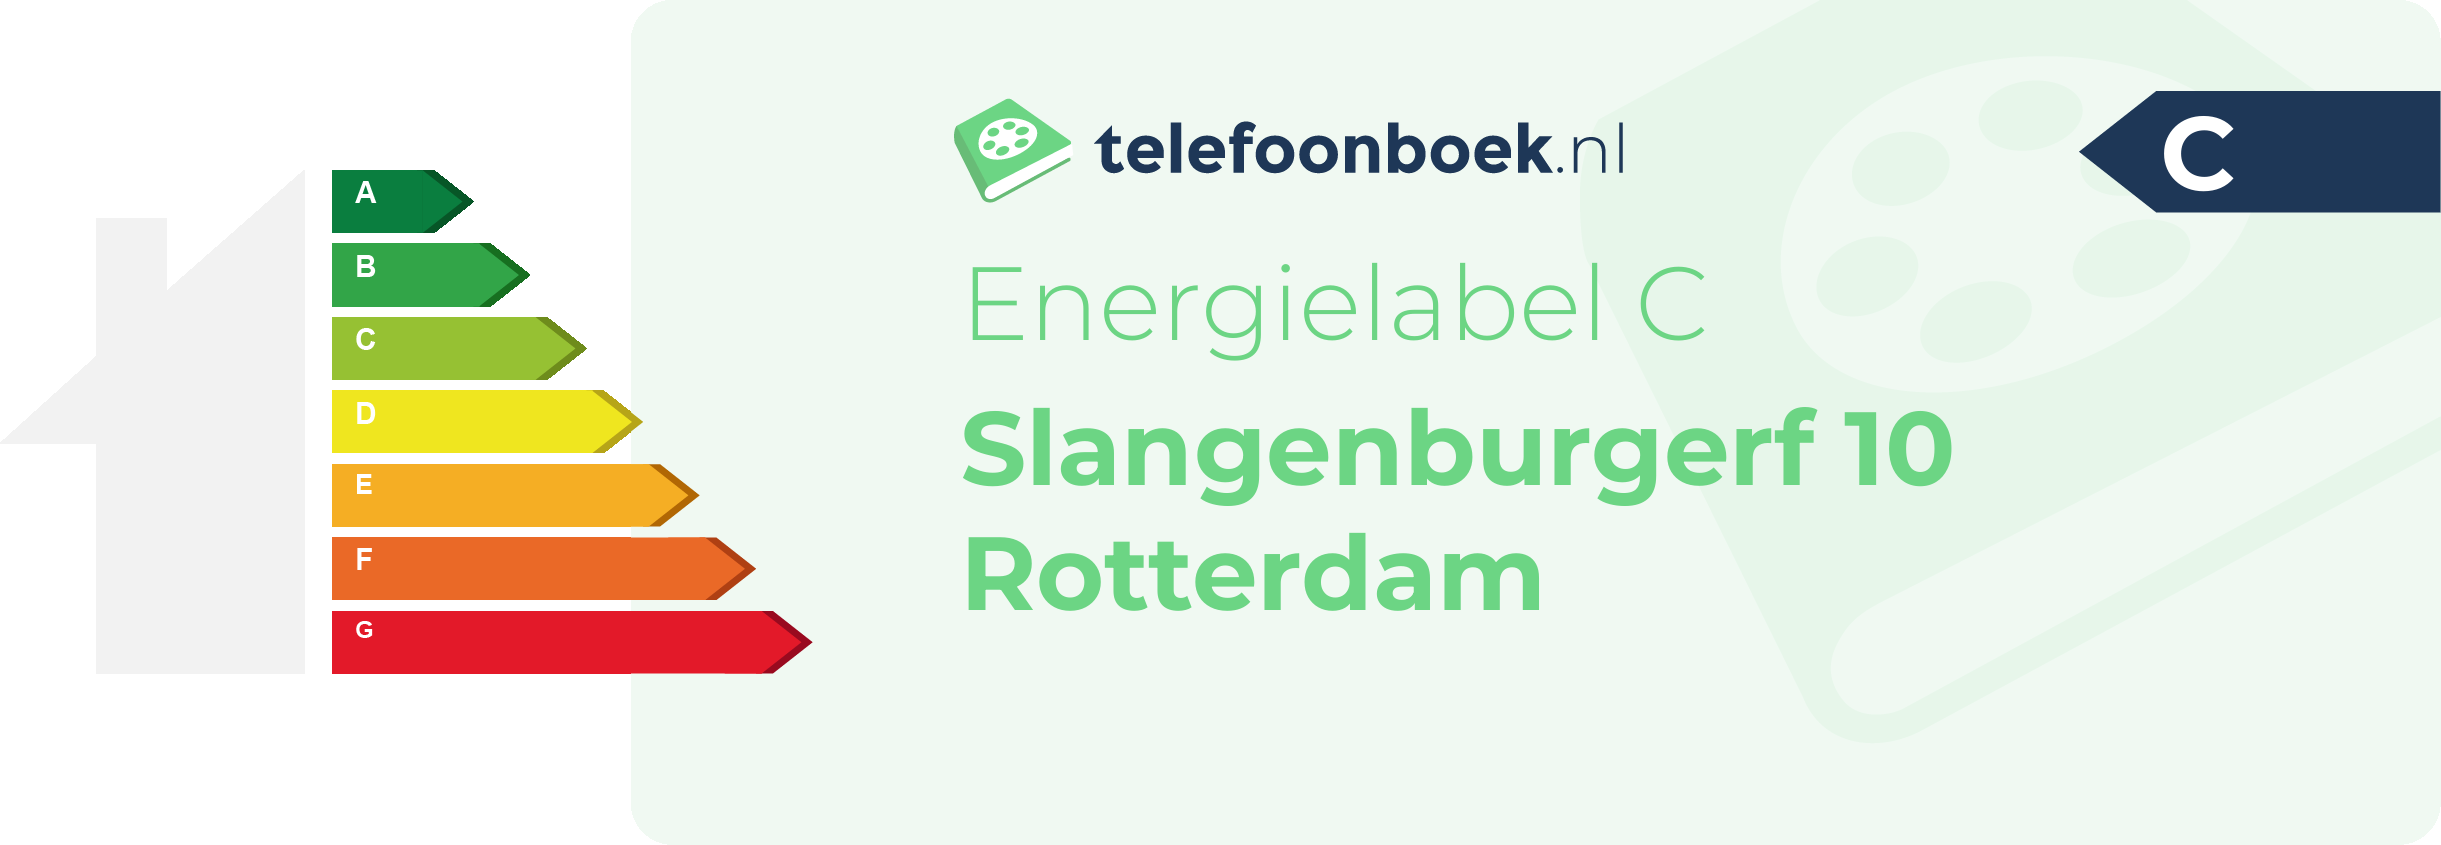 Energielabel Slangenburgerf 10 Rotterdam